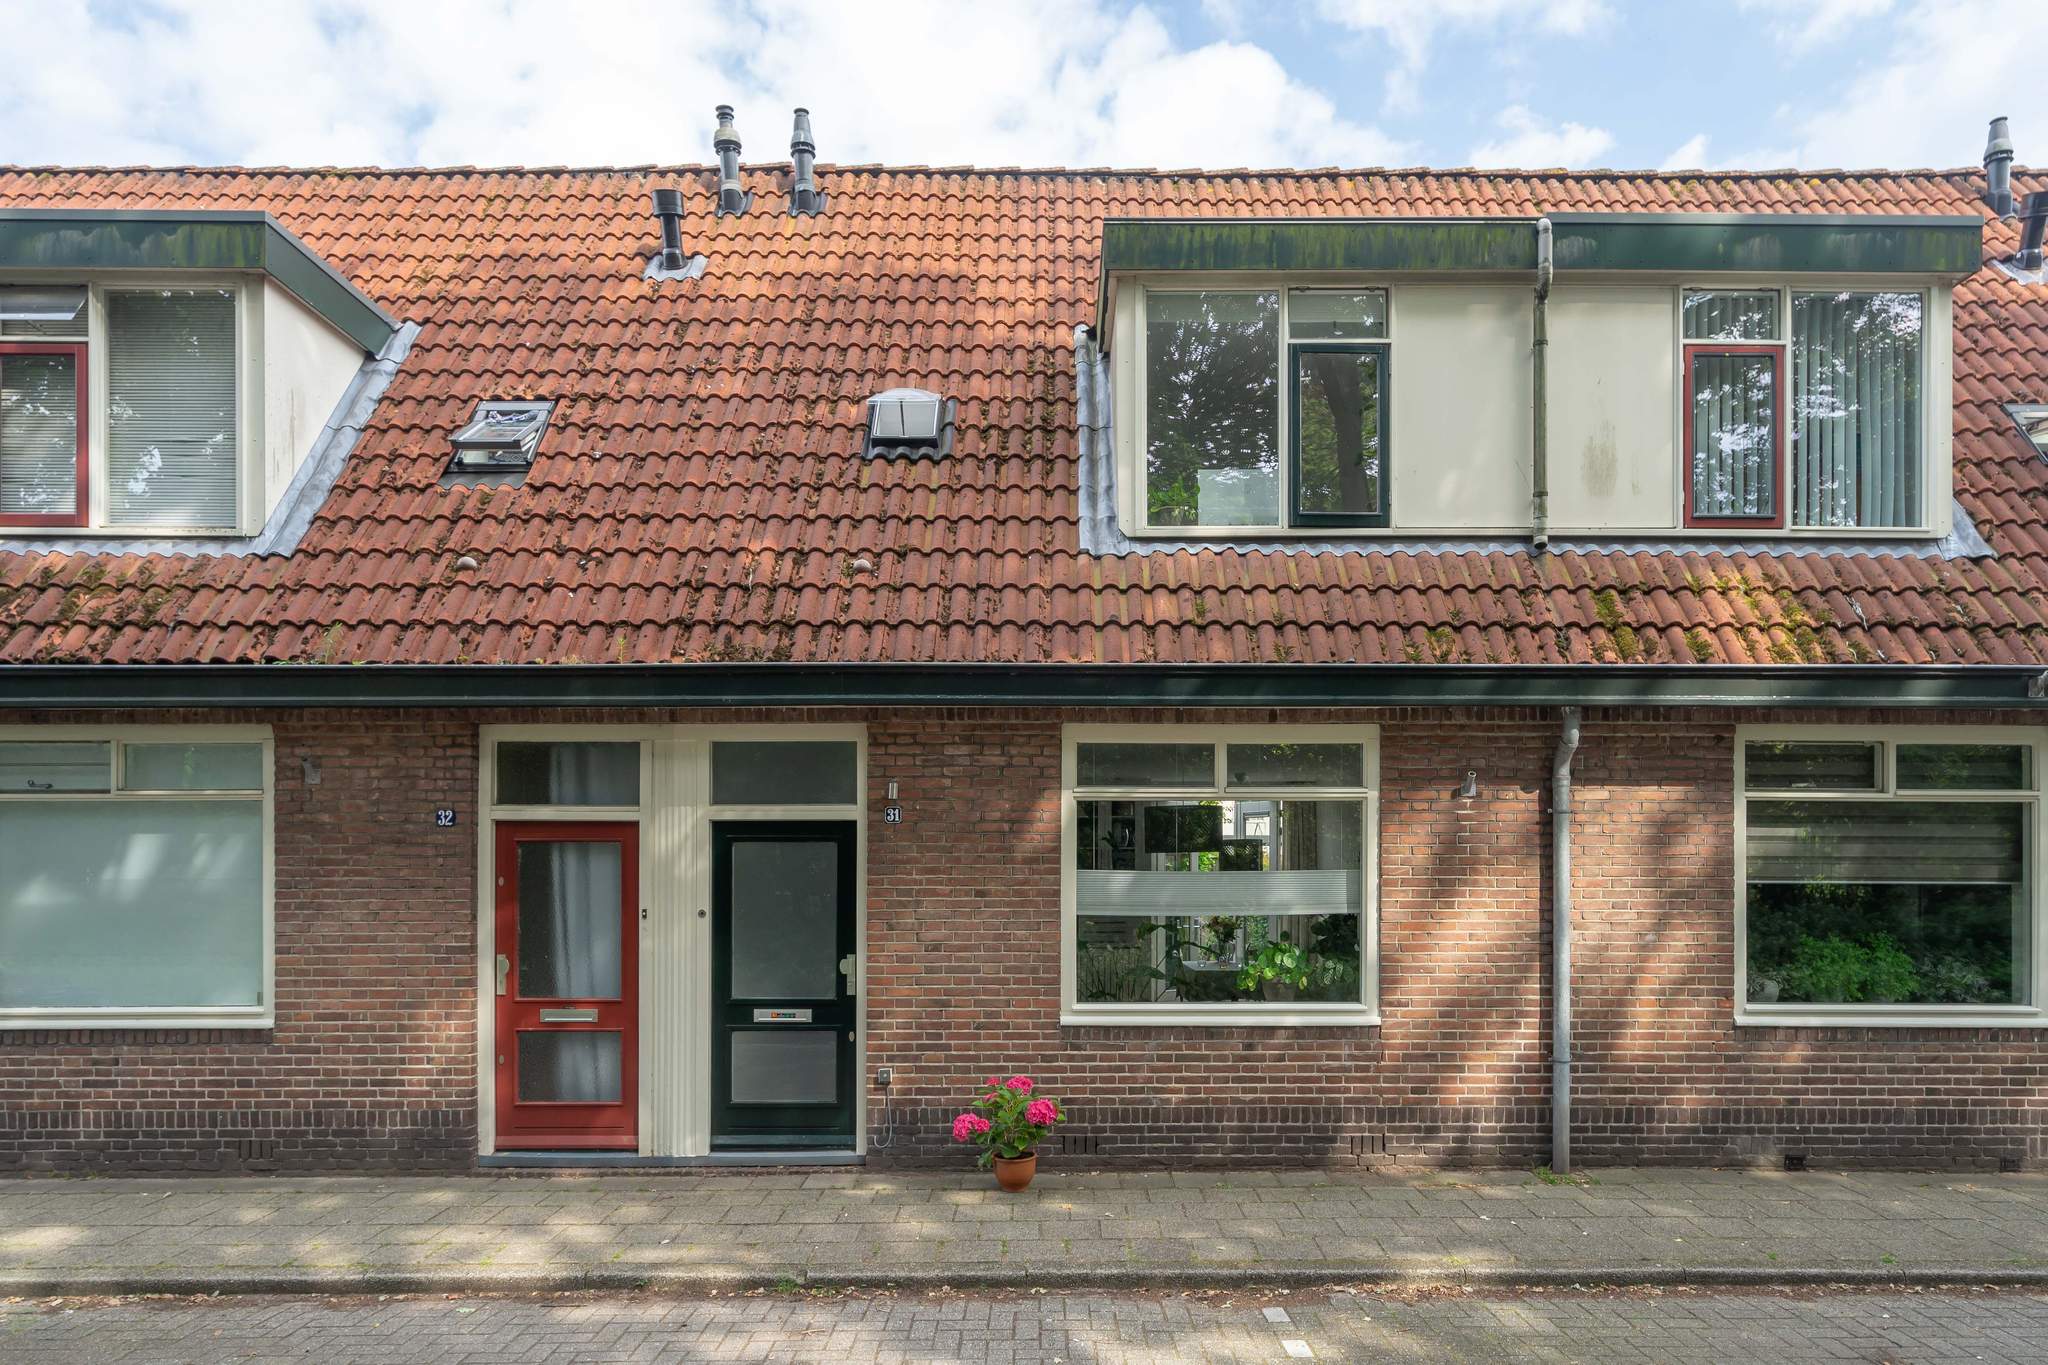 Sint Willibrordusstraat 31 in Soesterkwartier / Amersfoort, Amersfoort